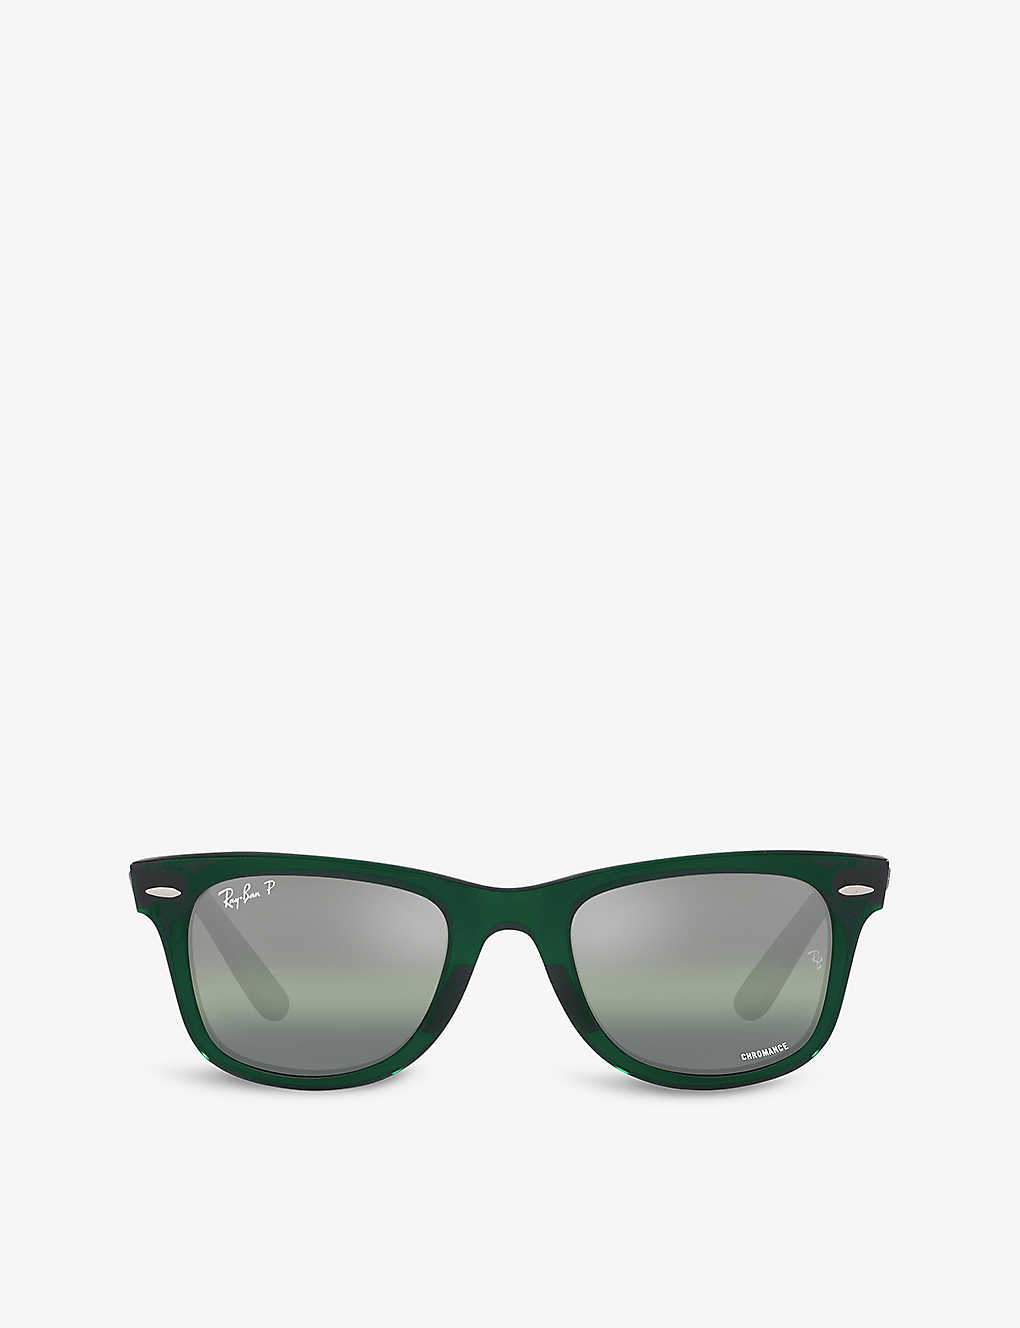 Ray Ban Ray-ban Womens Green Rb2140 Wayfarer Acetate Sunglasses